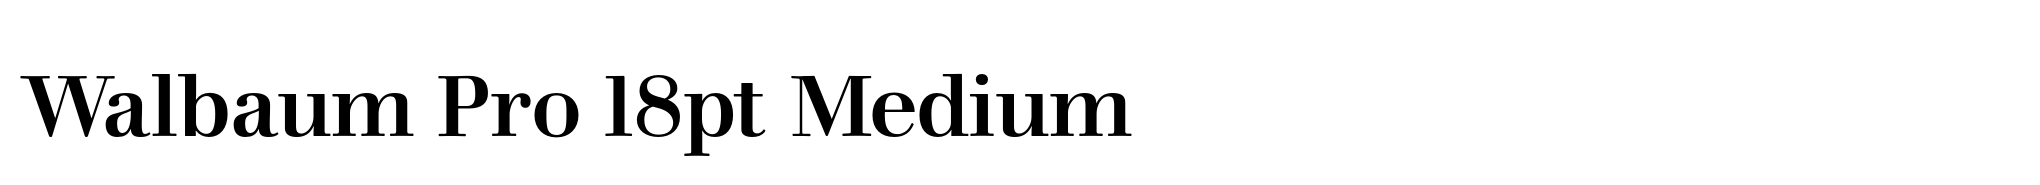 Walbaum Pro 18pt Medium image